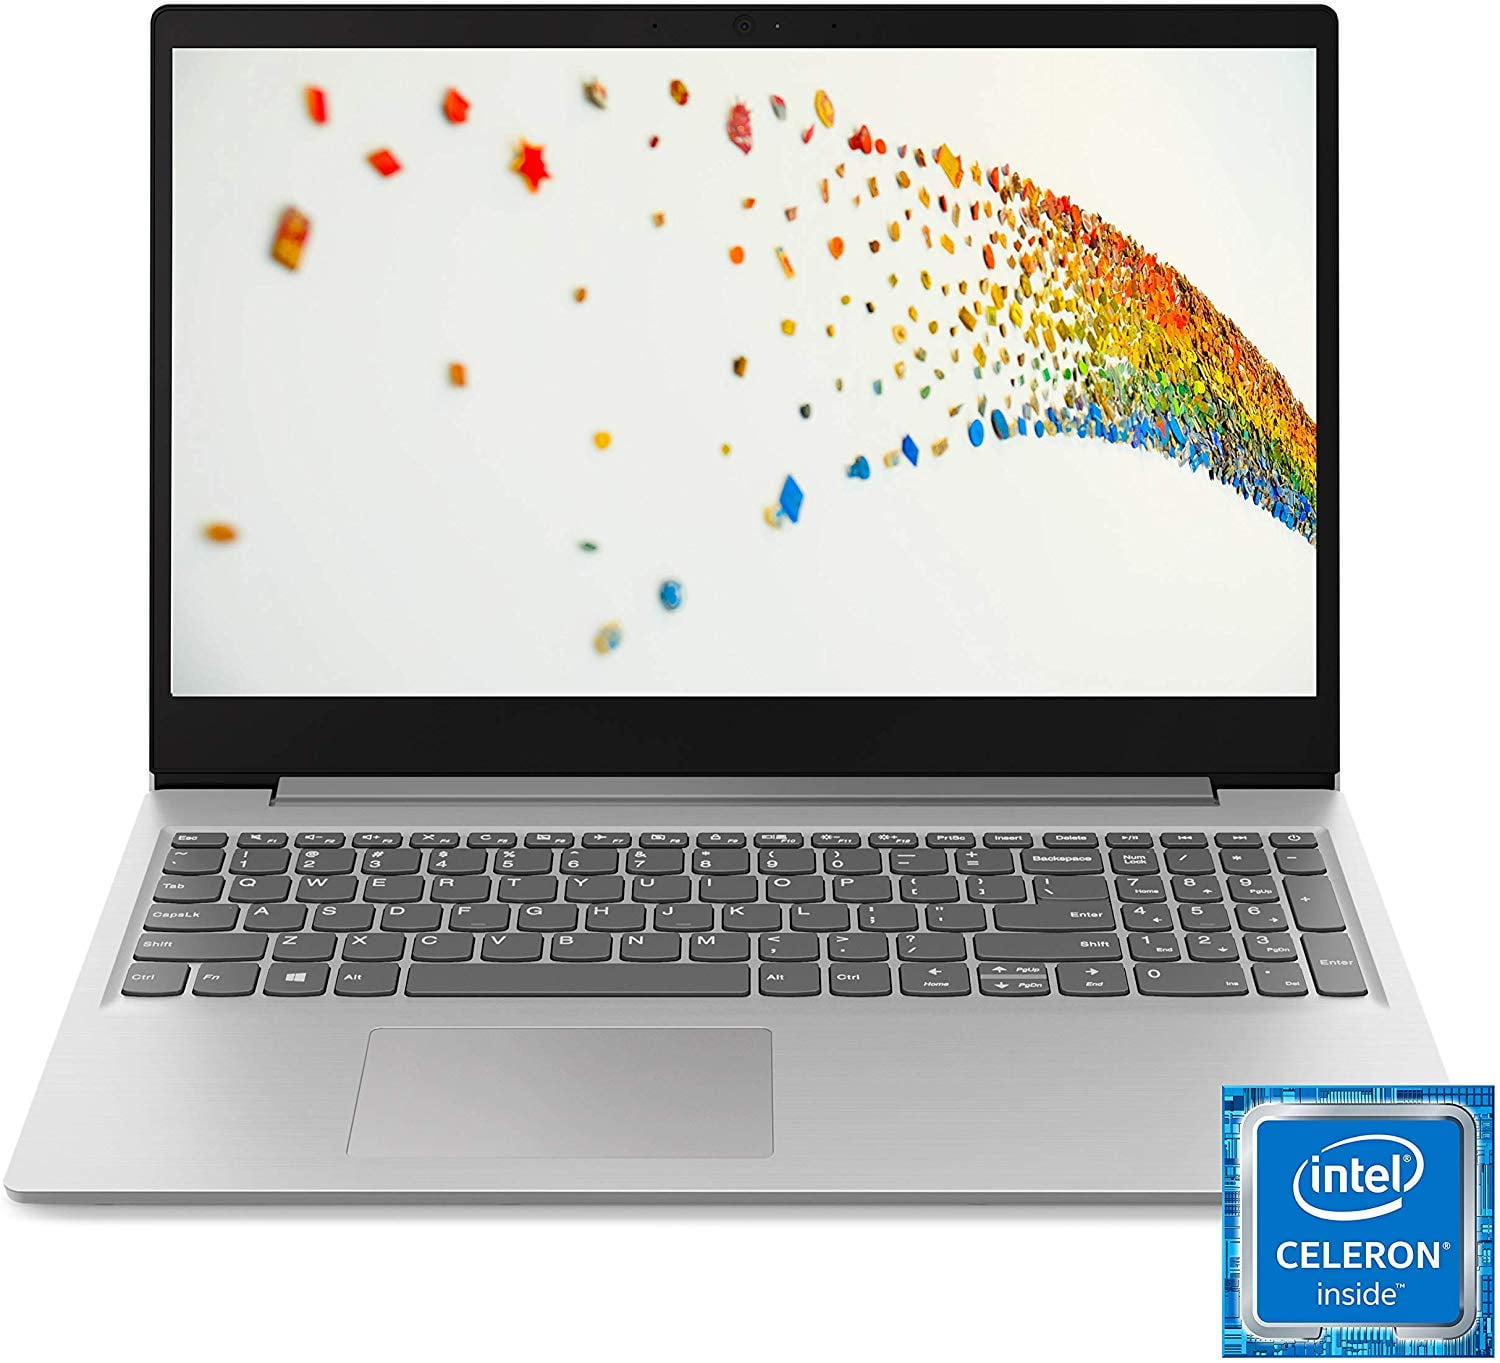 Lenovo Ideapad S Premium Laptop Computer Pc Hd Anti Glare Display Intel Celeron U